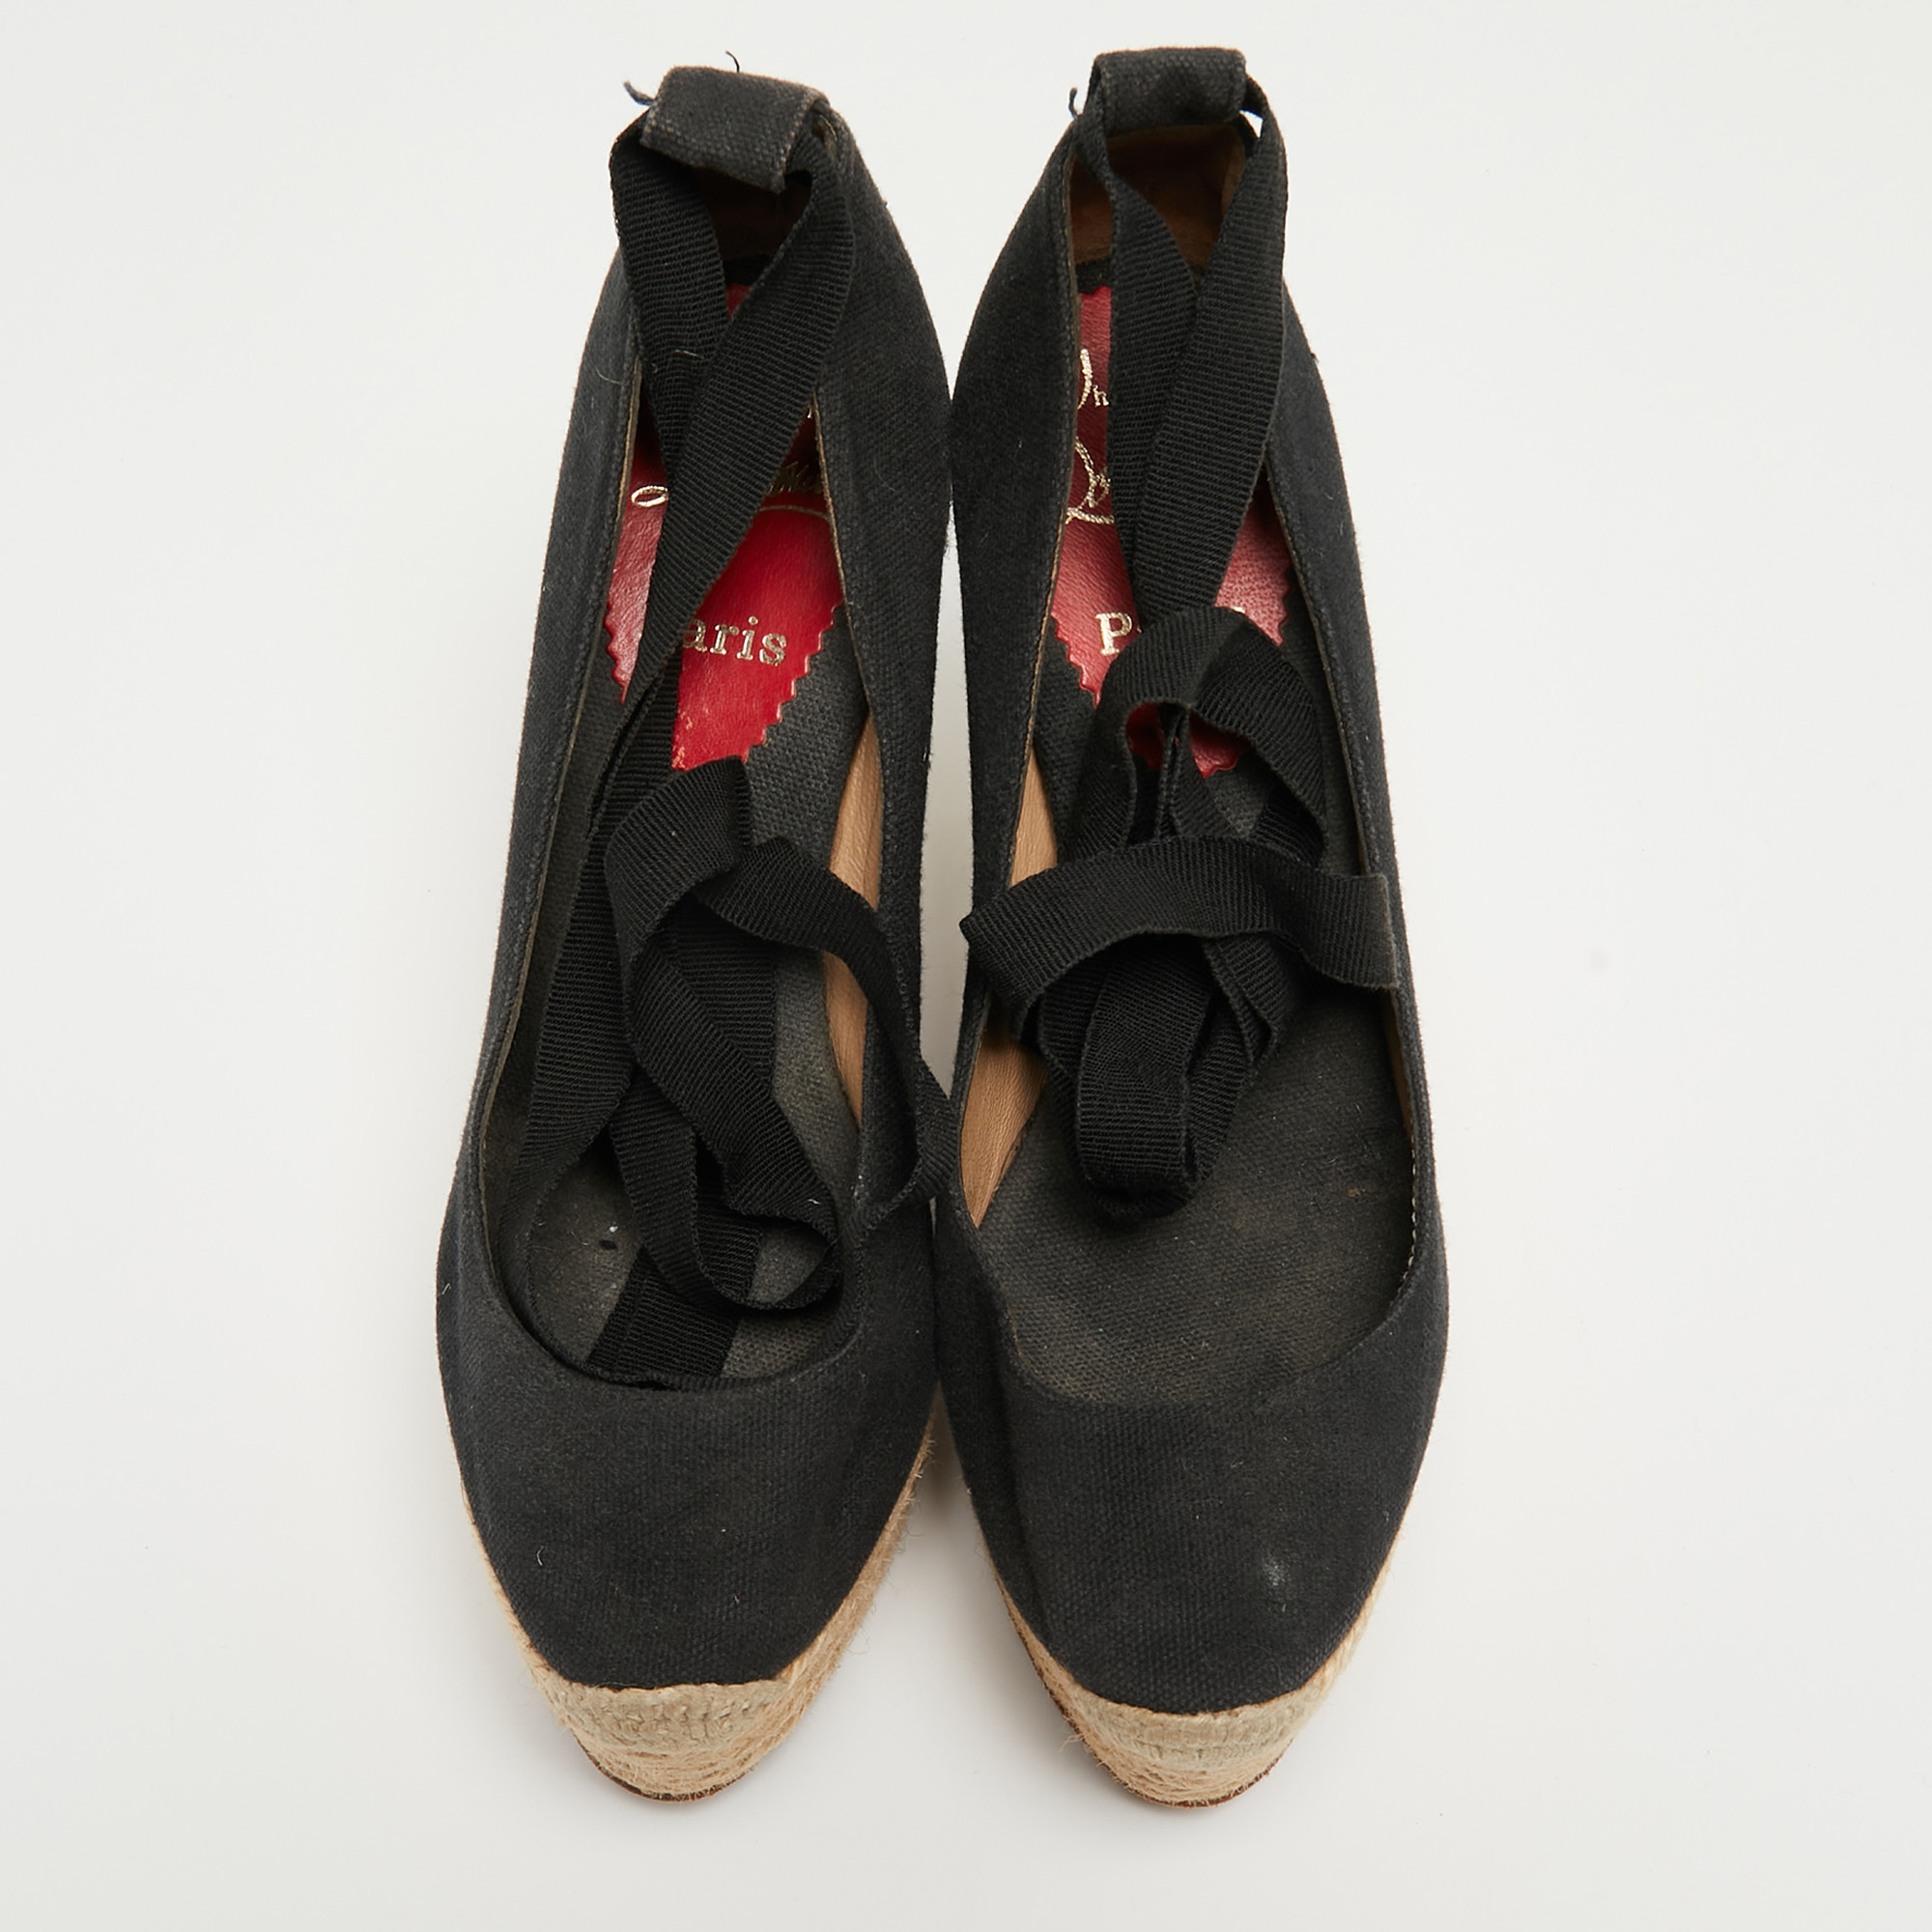 Christian Louboutin Black Canvas Formentera Espadrille Wedge Sandals Size 36